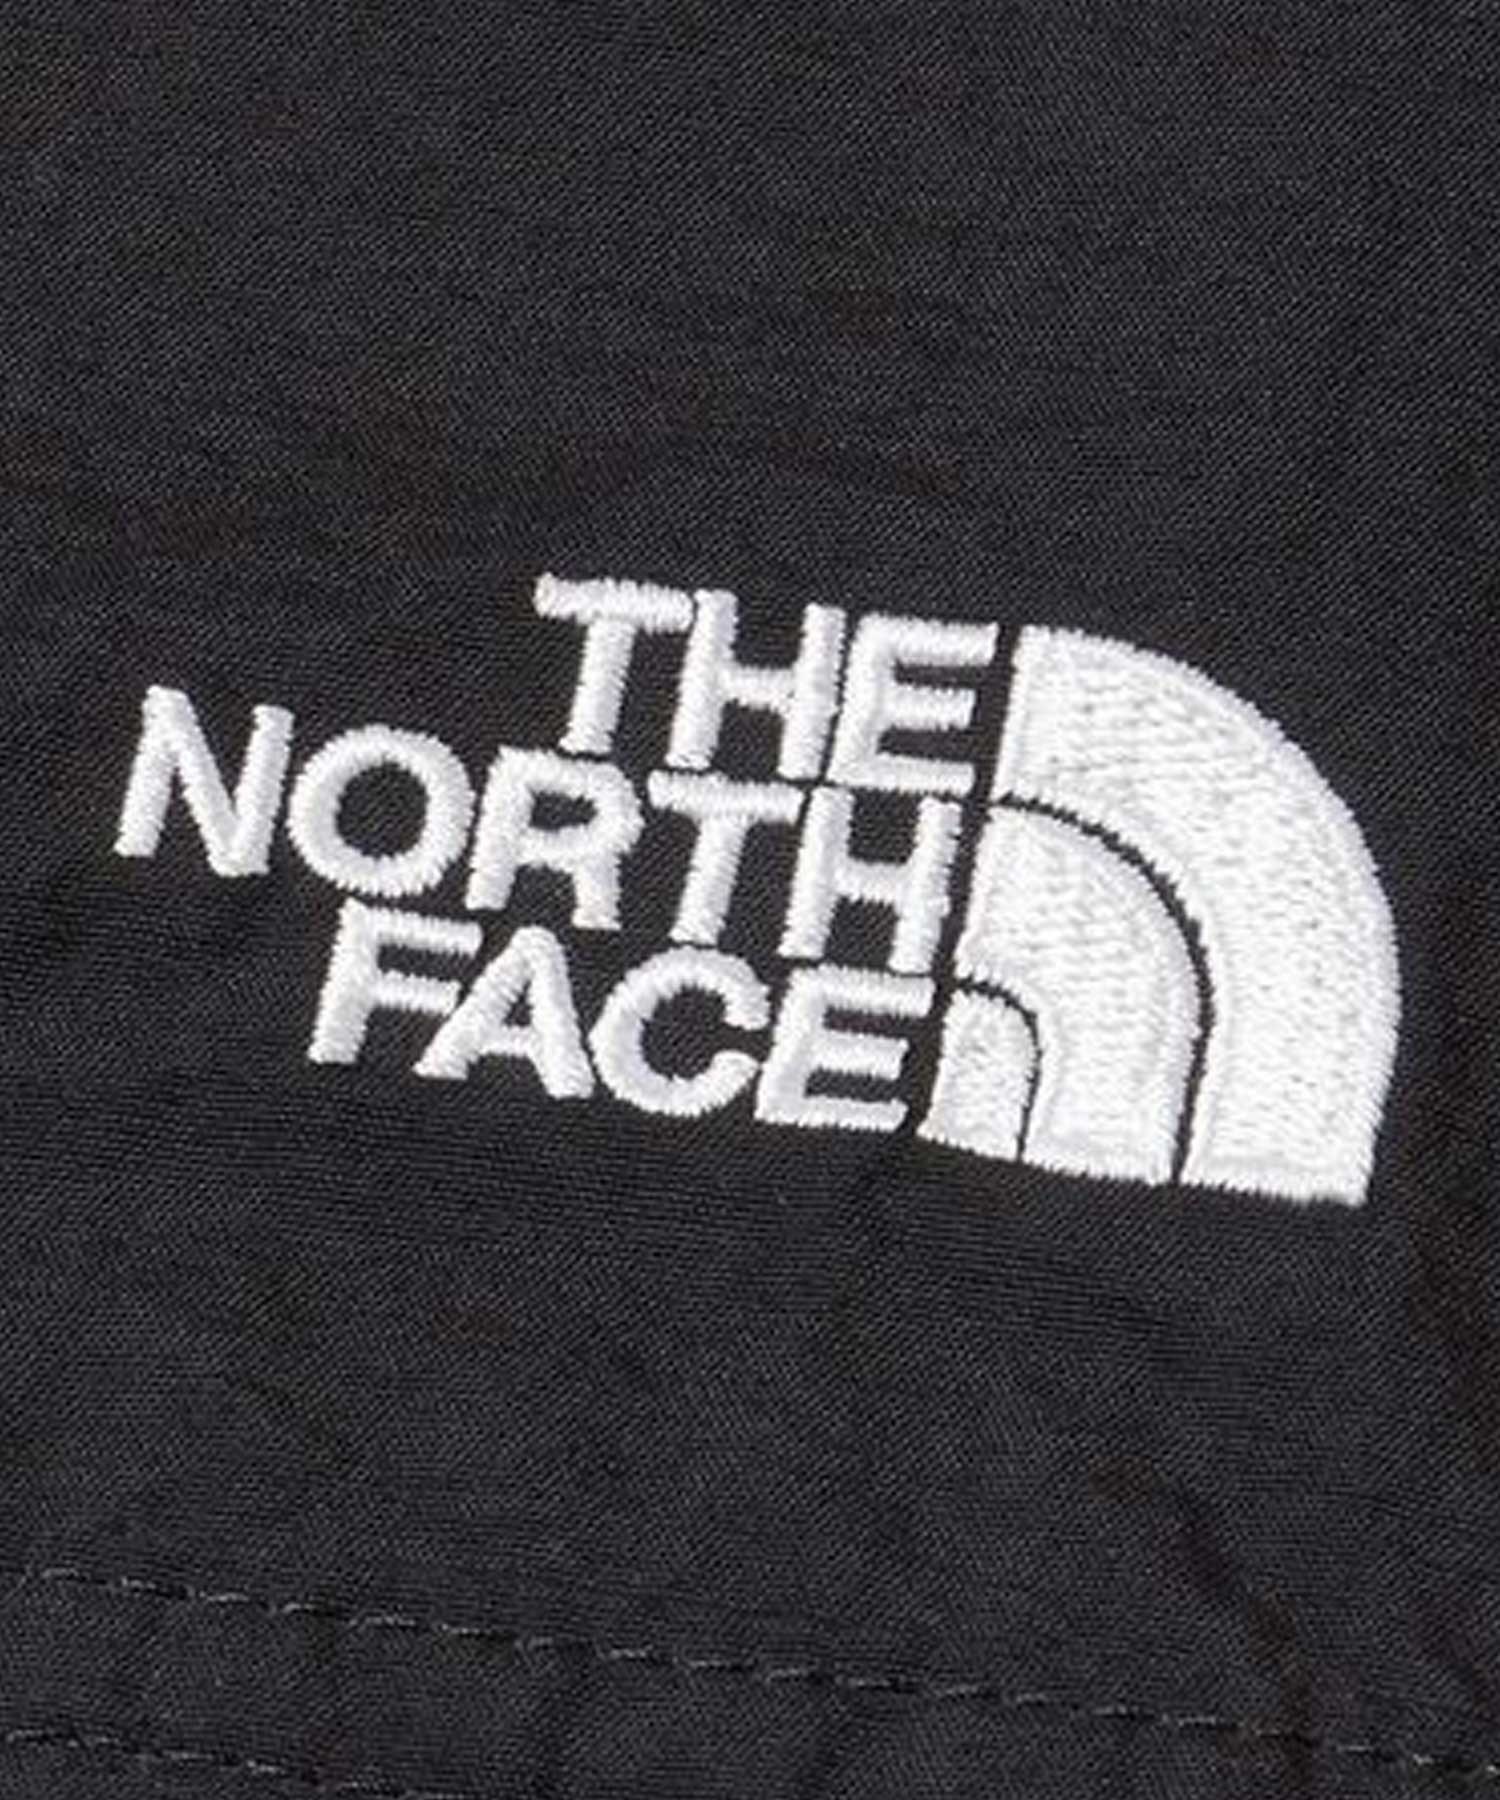 THE NORTH FACE/ザ・ノース・フェイス COMPACT JACKET メンズ